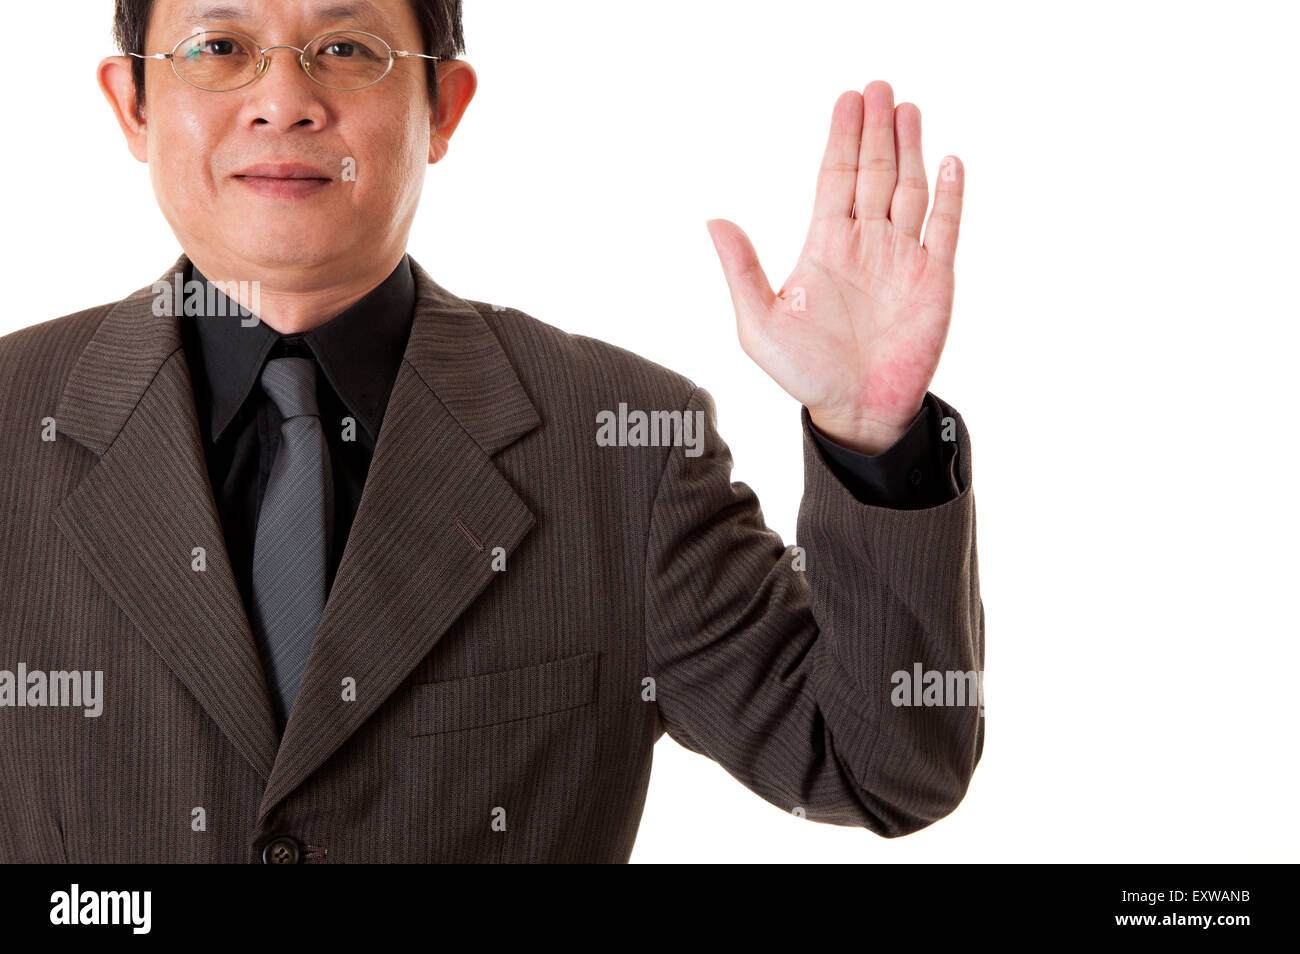 Man making oath and reaching hand, Stock Photo